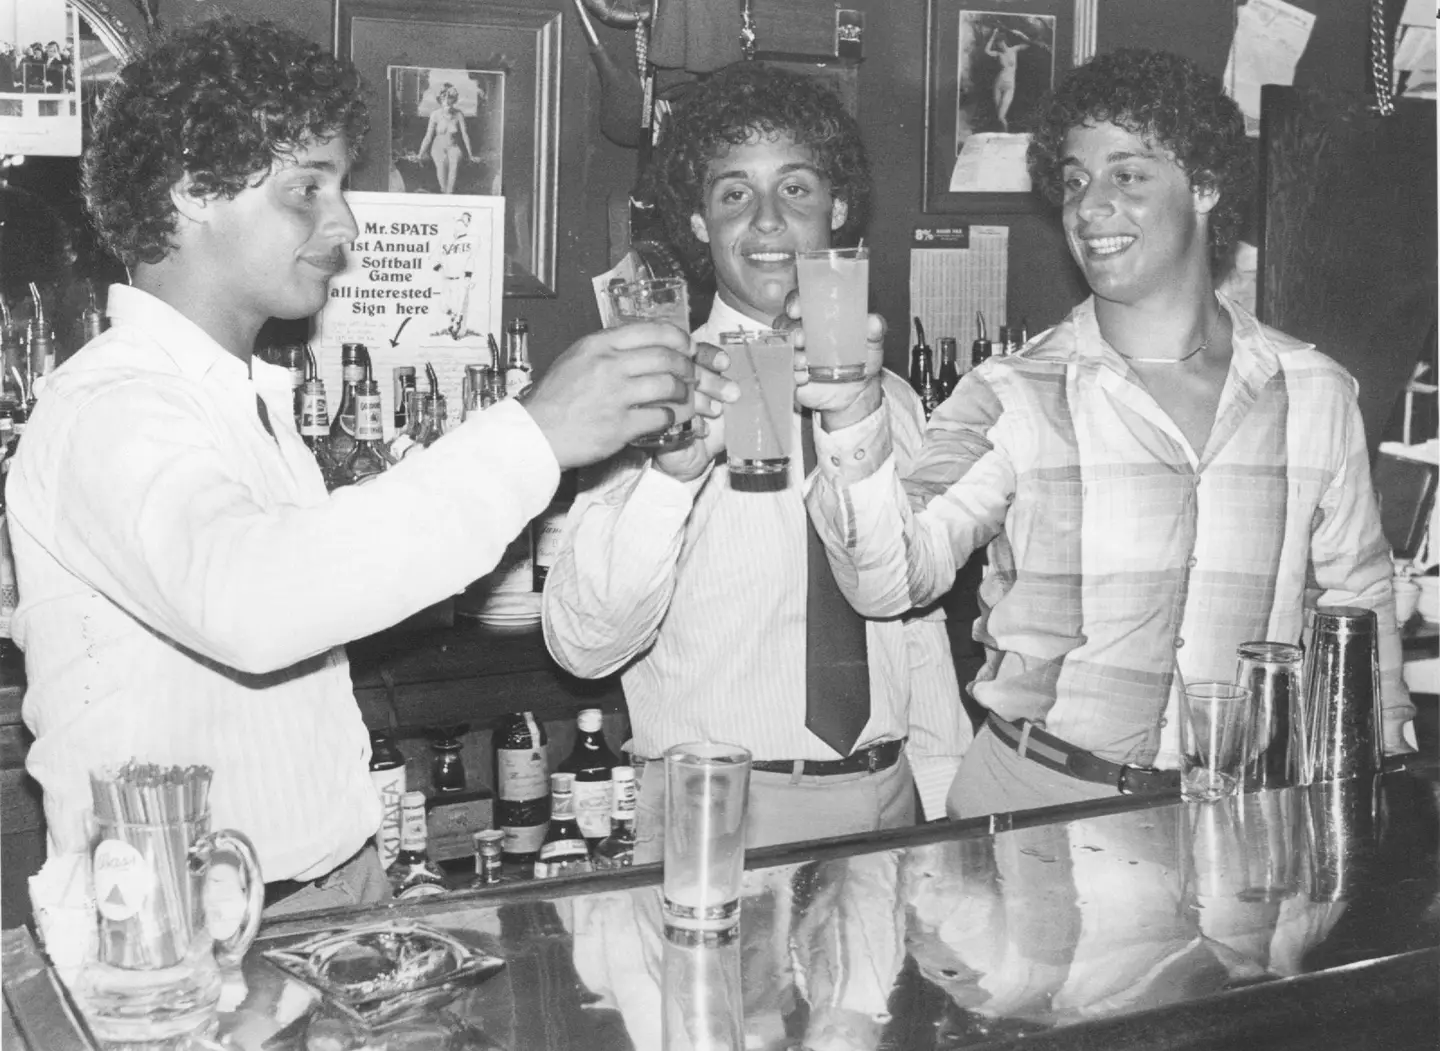 Triplets Robert Shafran, David Kellman and Edward Galland pictured in 1981.